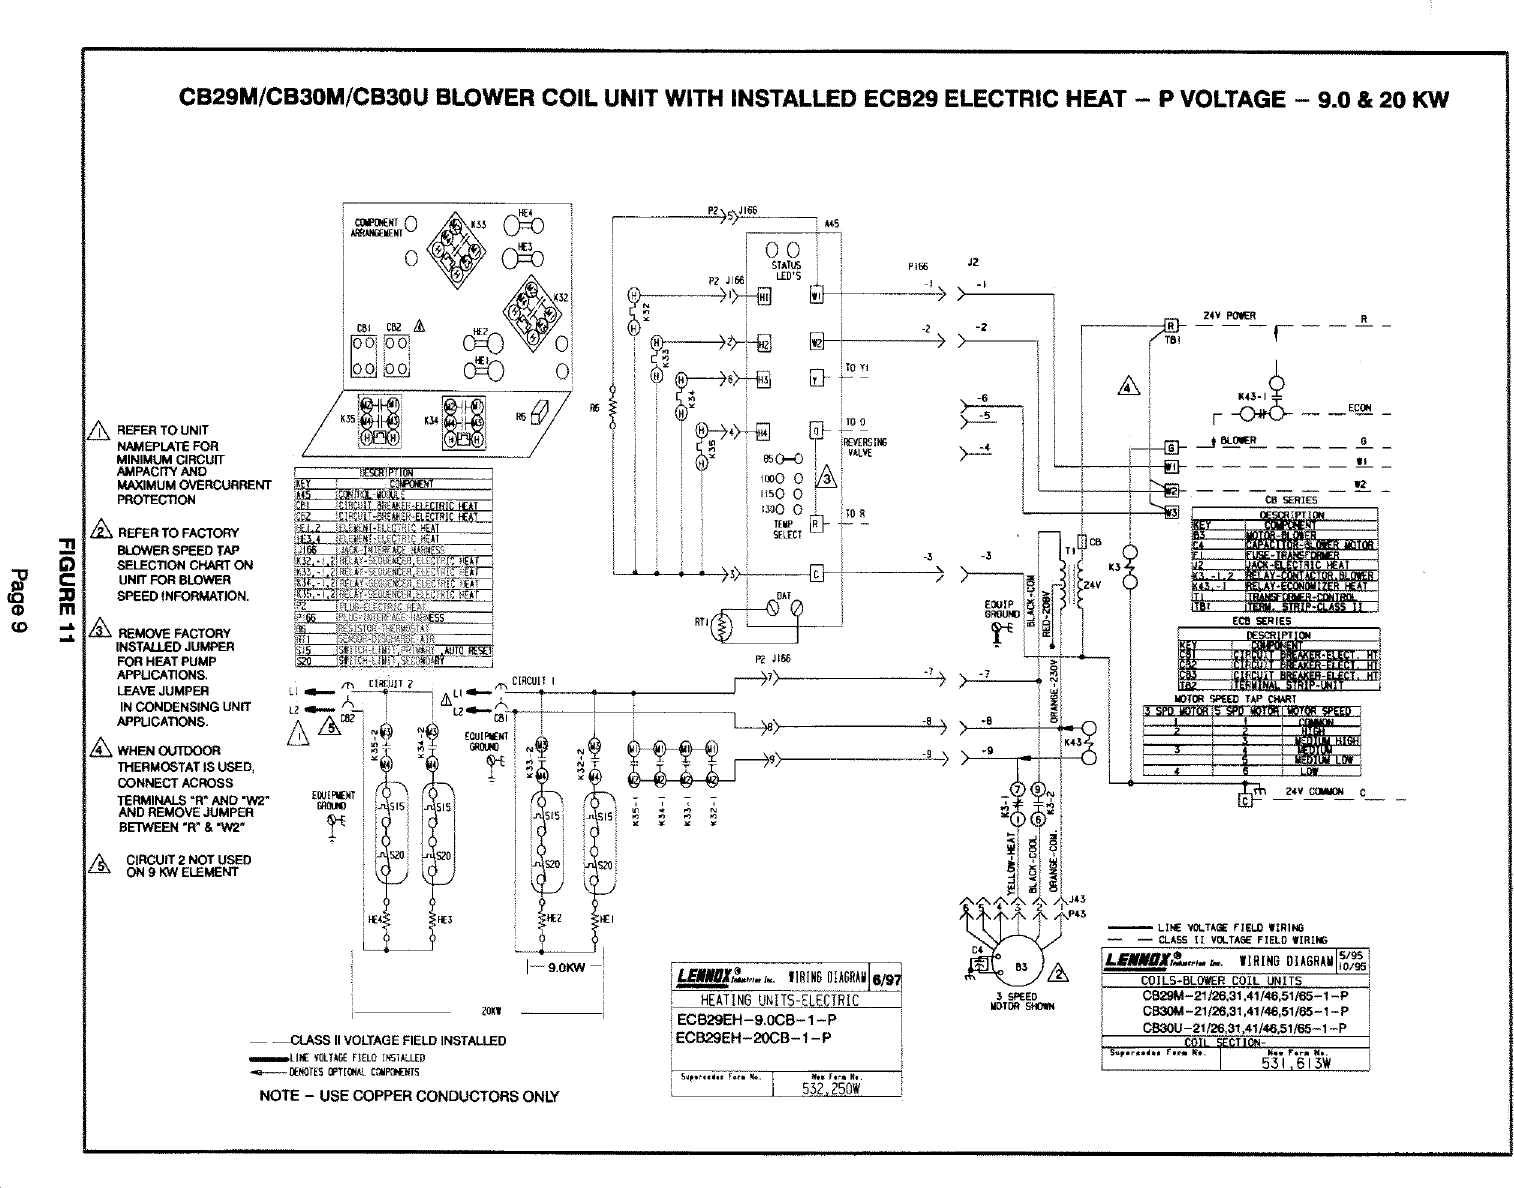 LENNOX Air Handler Auxiliary Heater Kit Manual L0805584  Wiring Diagram Lennox Air Conditioner    UserManual.wiki